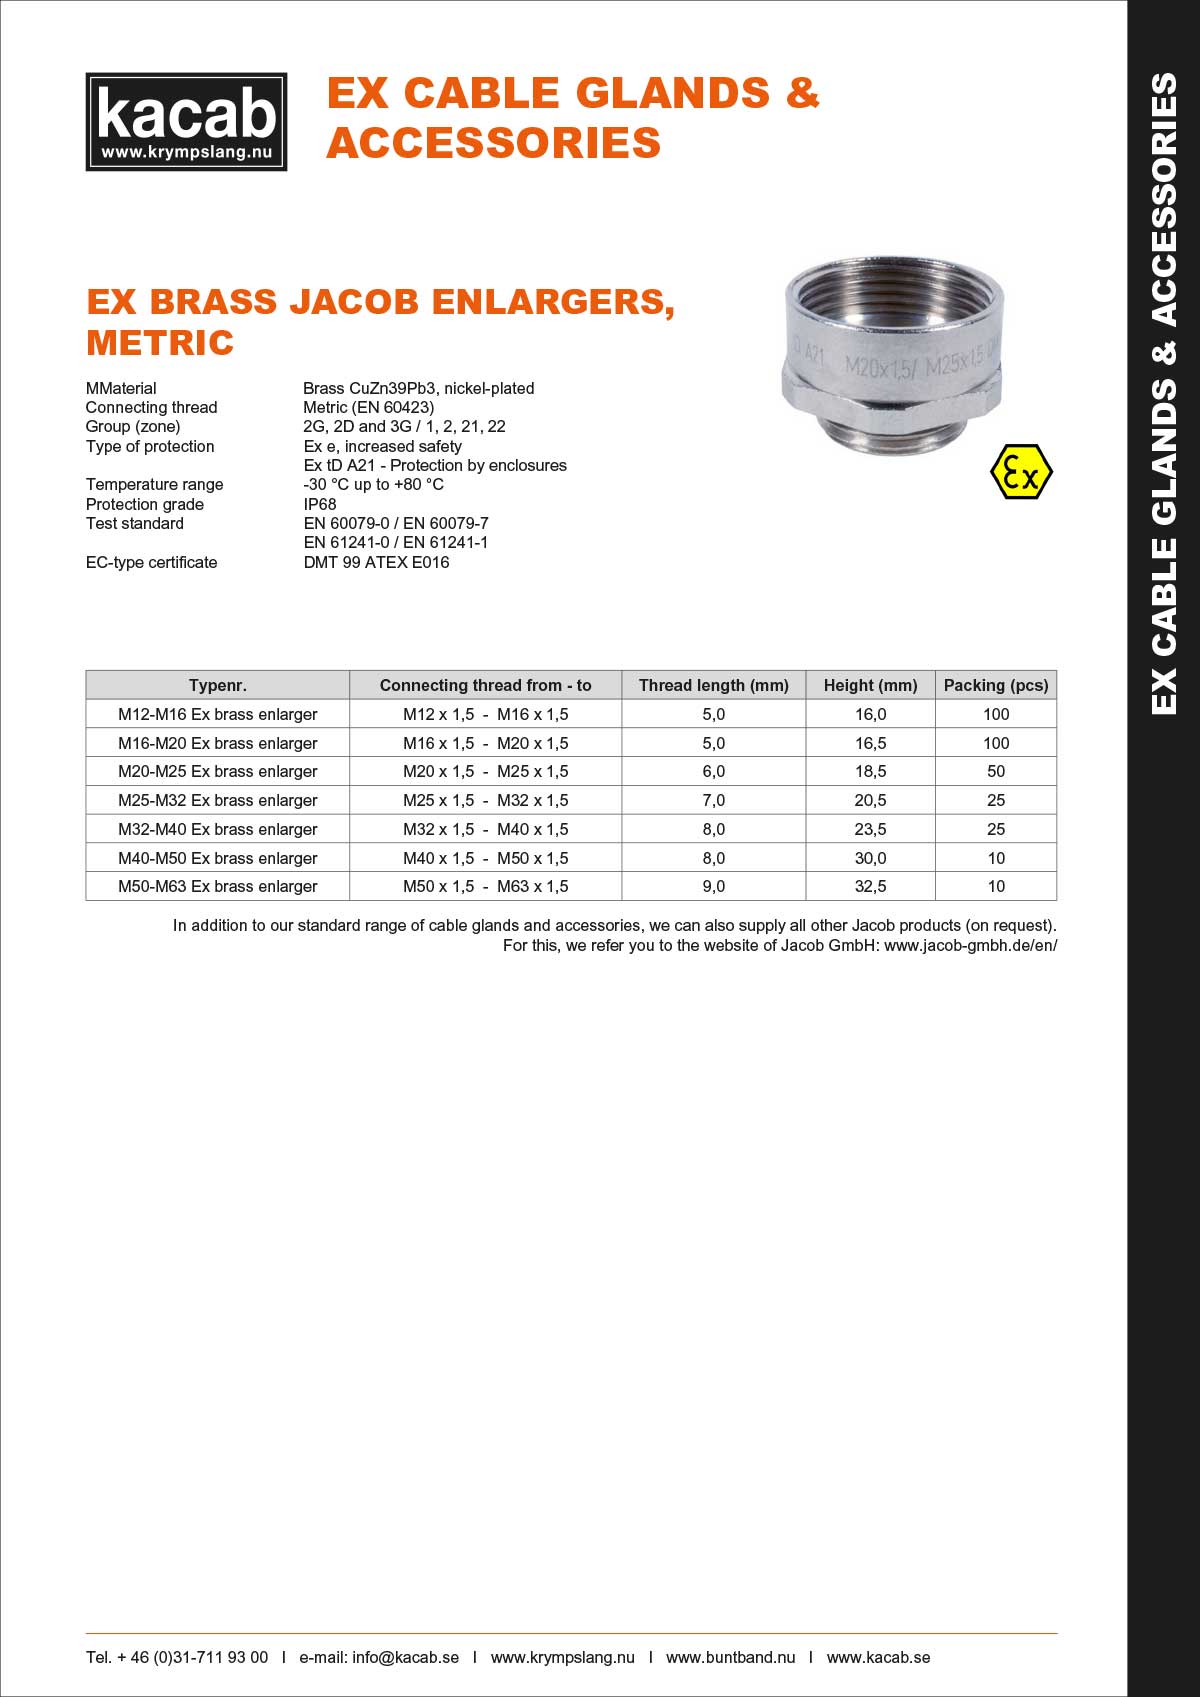 Ex brass Jacob enlargers - Metric